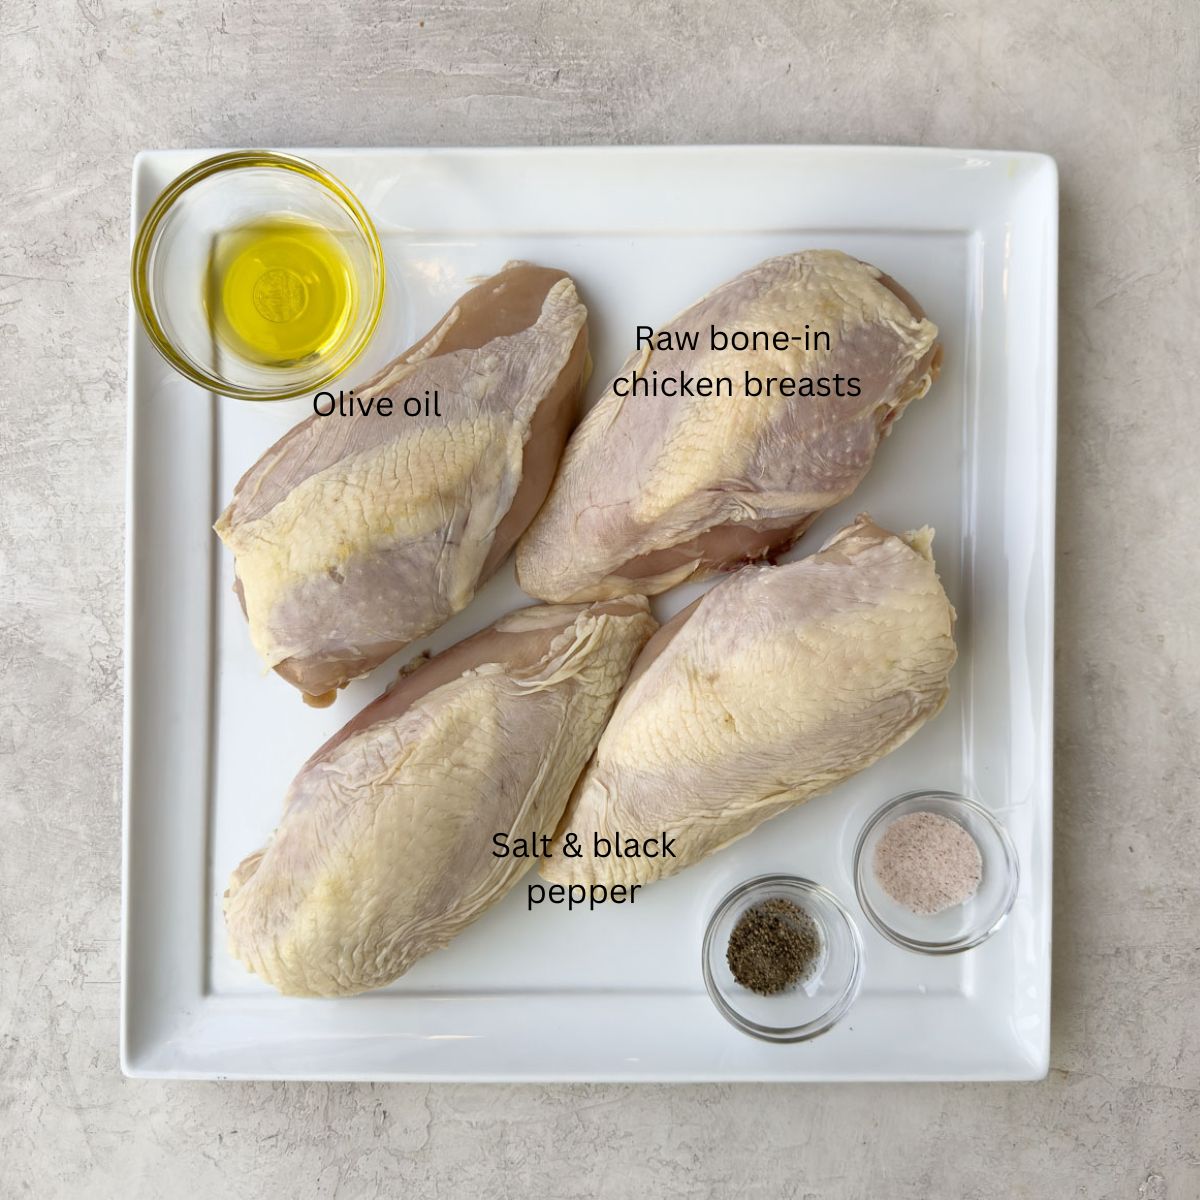 Raw bonin chicken breasts on a white platter.